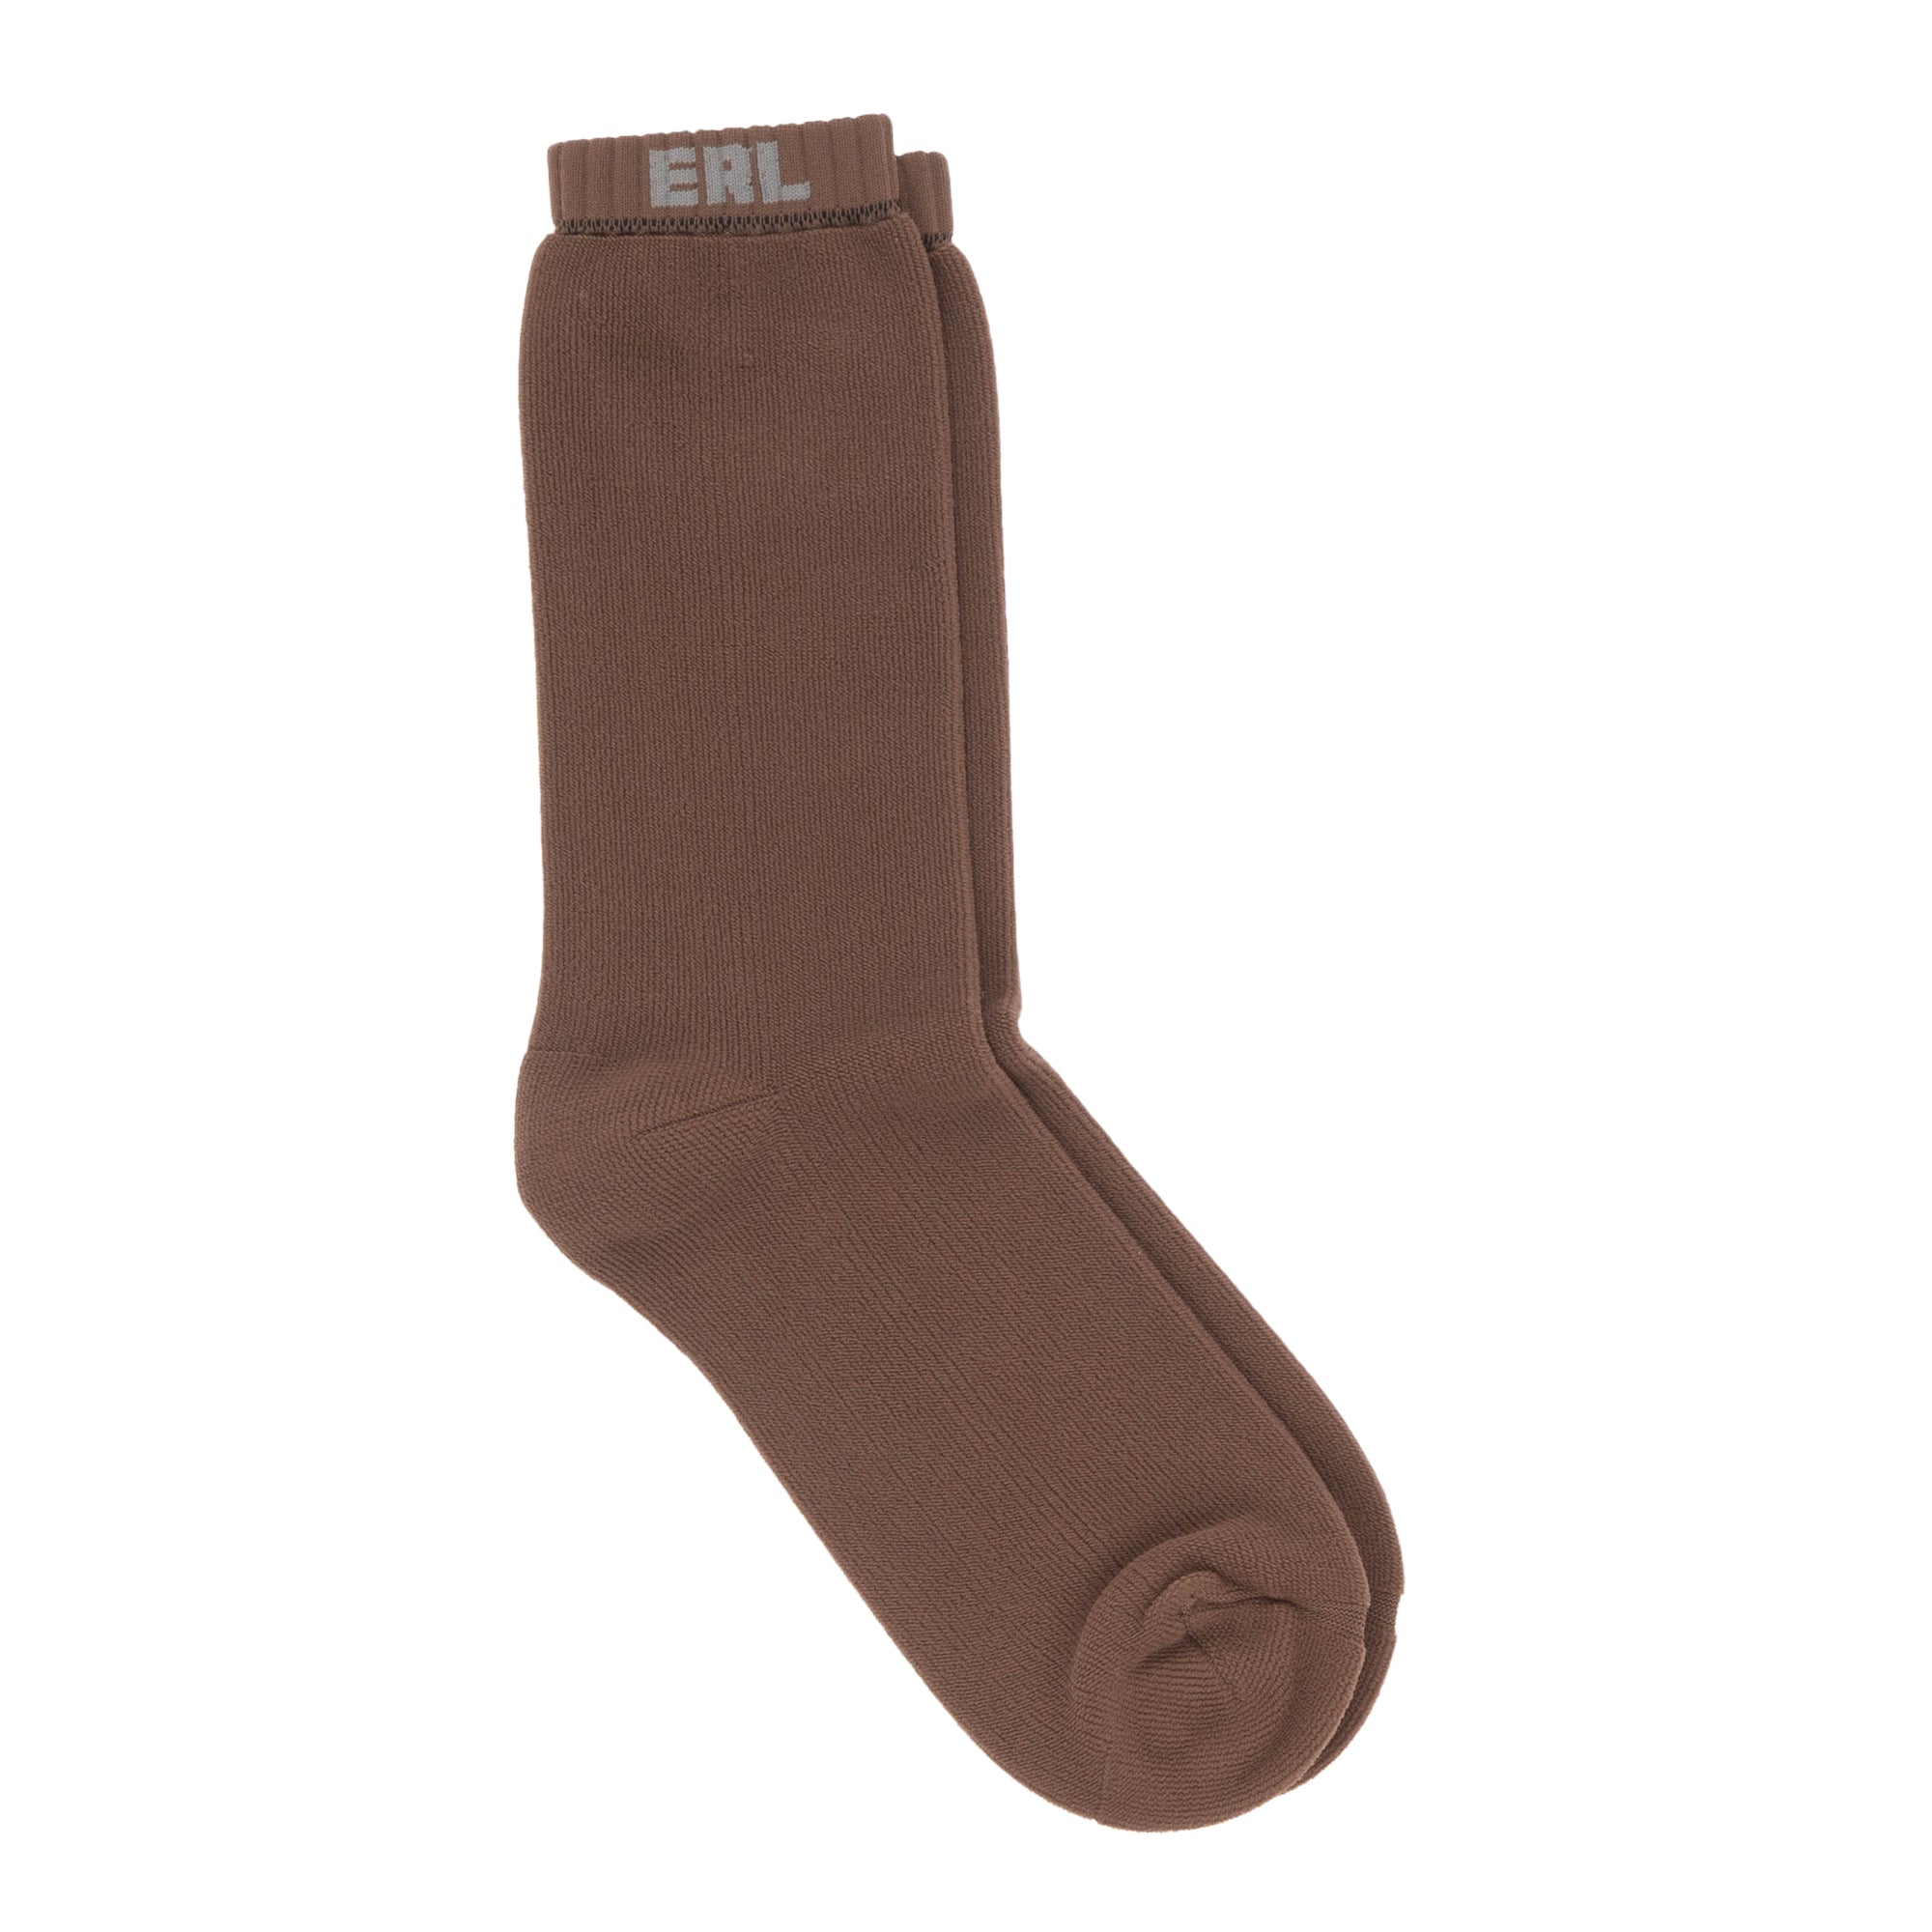 Unisex Knit Socks Brown ERL08K071